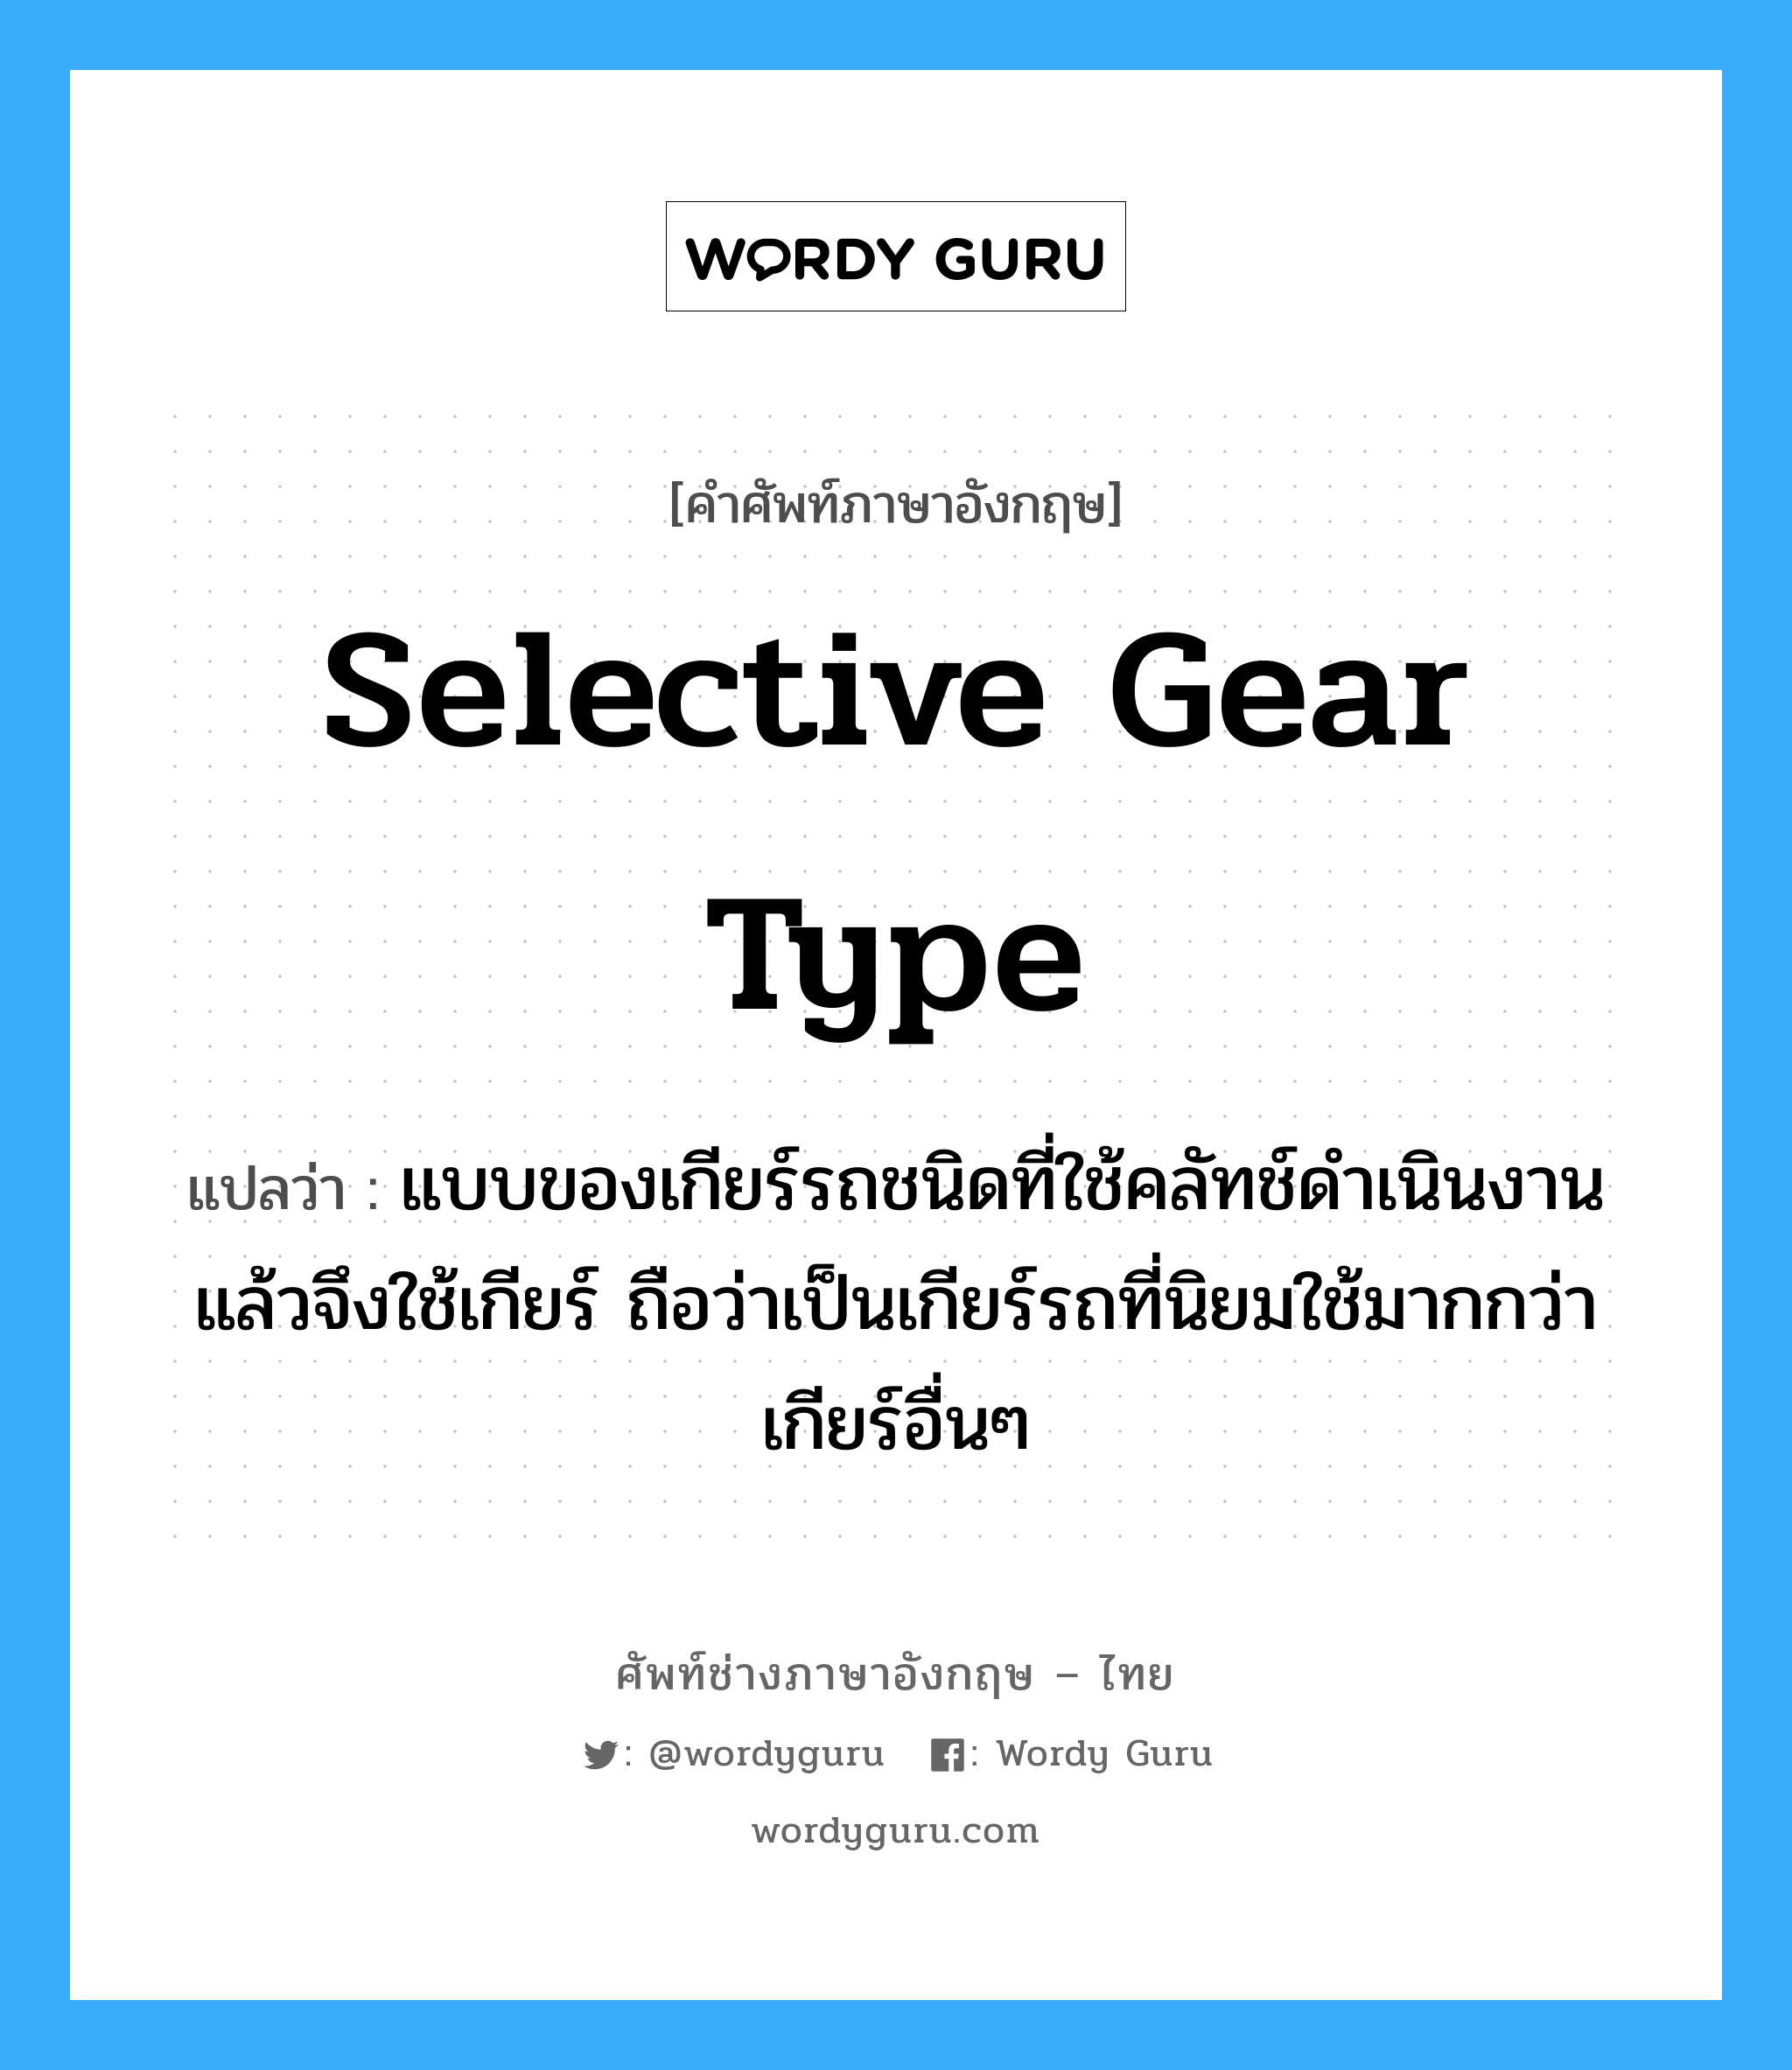 selective gear type แปลว่า?, คำศัพท์ช่างภาษาอังกฤษ - ไทย selective gear type คำศัพท์ภาษาอังกฤษ selective gear type แปลว่า แบบของเกียร์รถชนิดที่ใช้คลัทช์ดำเนินงานแล้วจึงใช้เกียร์ ถือว่าเป็นเกียร์รถที่นิยมใช้มากกว่าเกียร์อื่นๆ